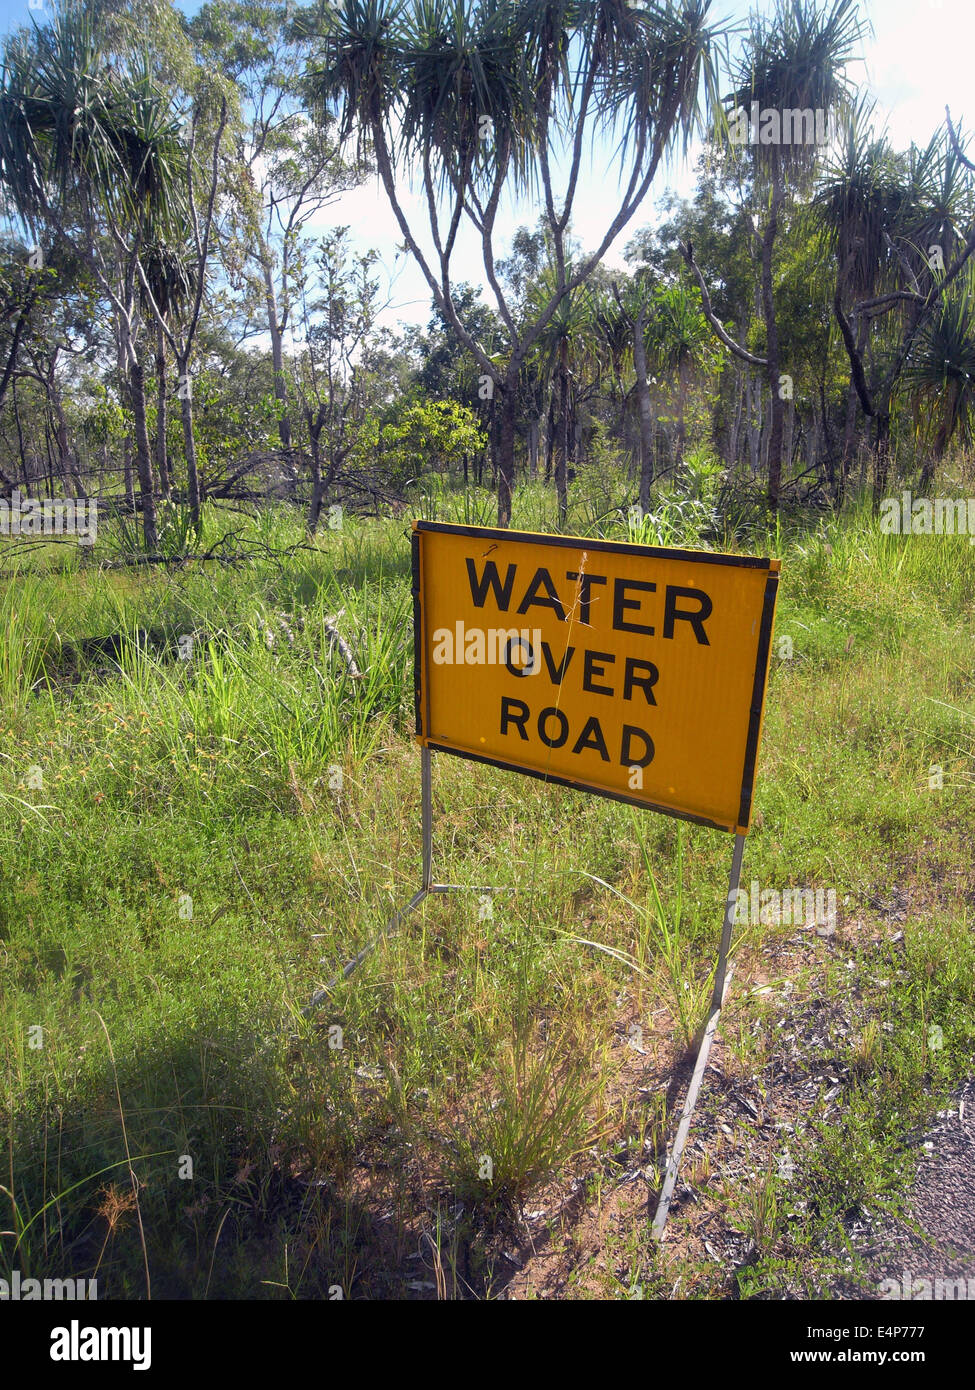 Kakadu in the wet season - sign warning of water covering road. Kakadu National Park, Northern Territory, Australia Stock Photo